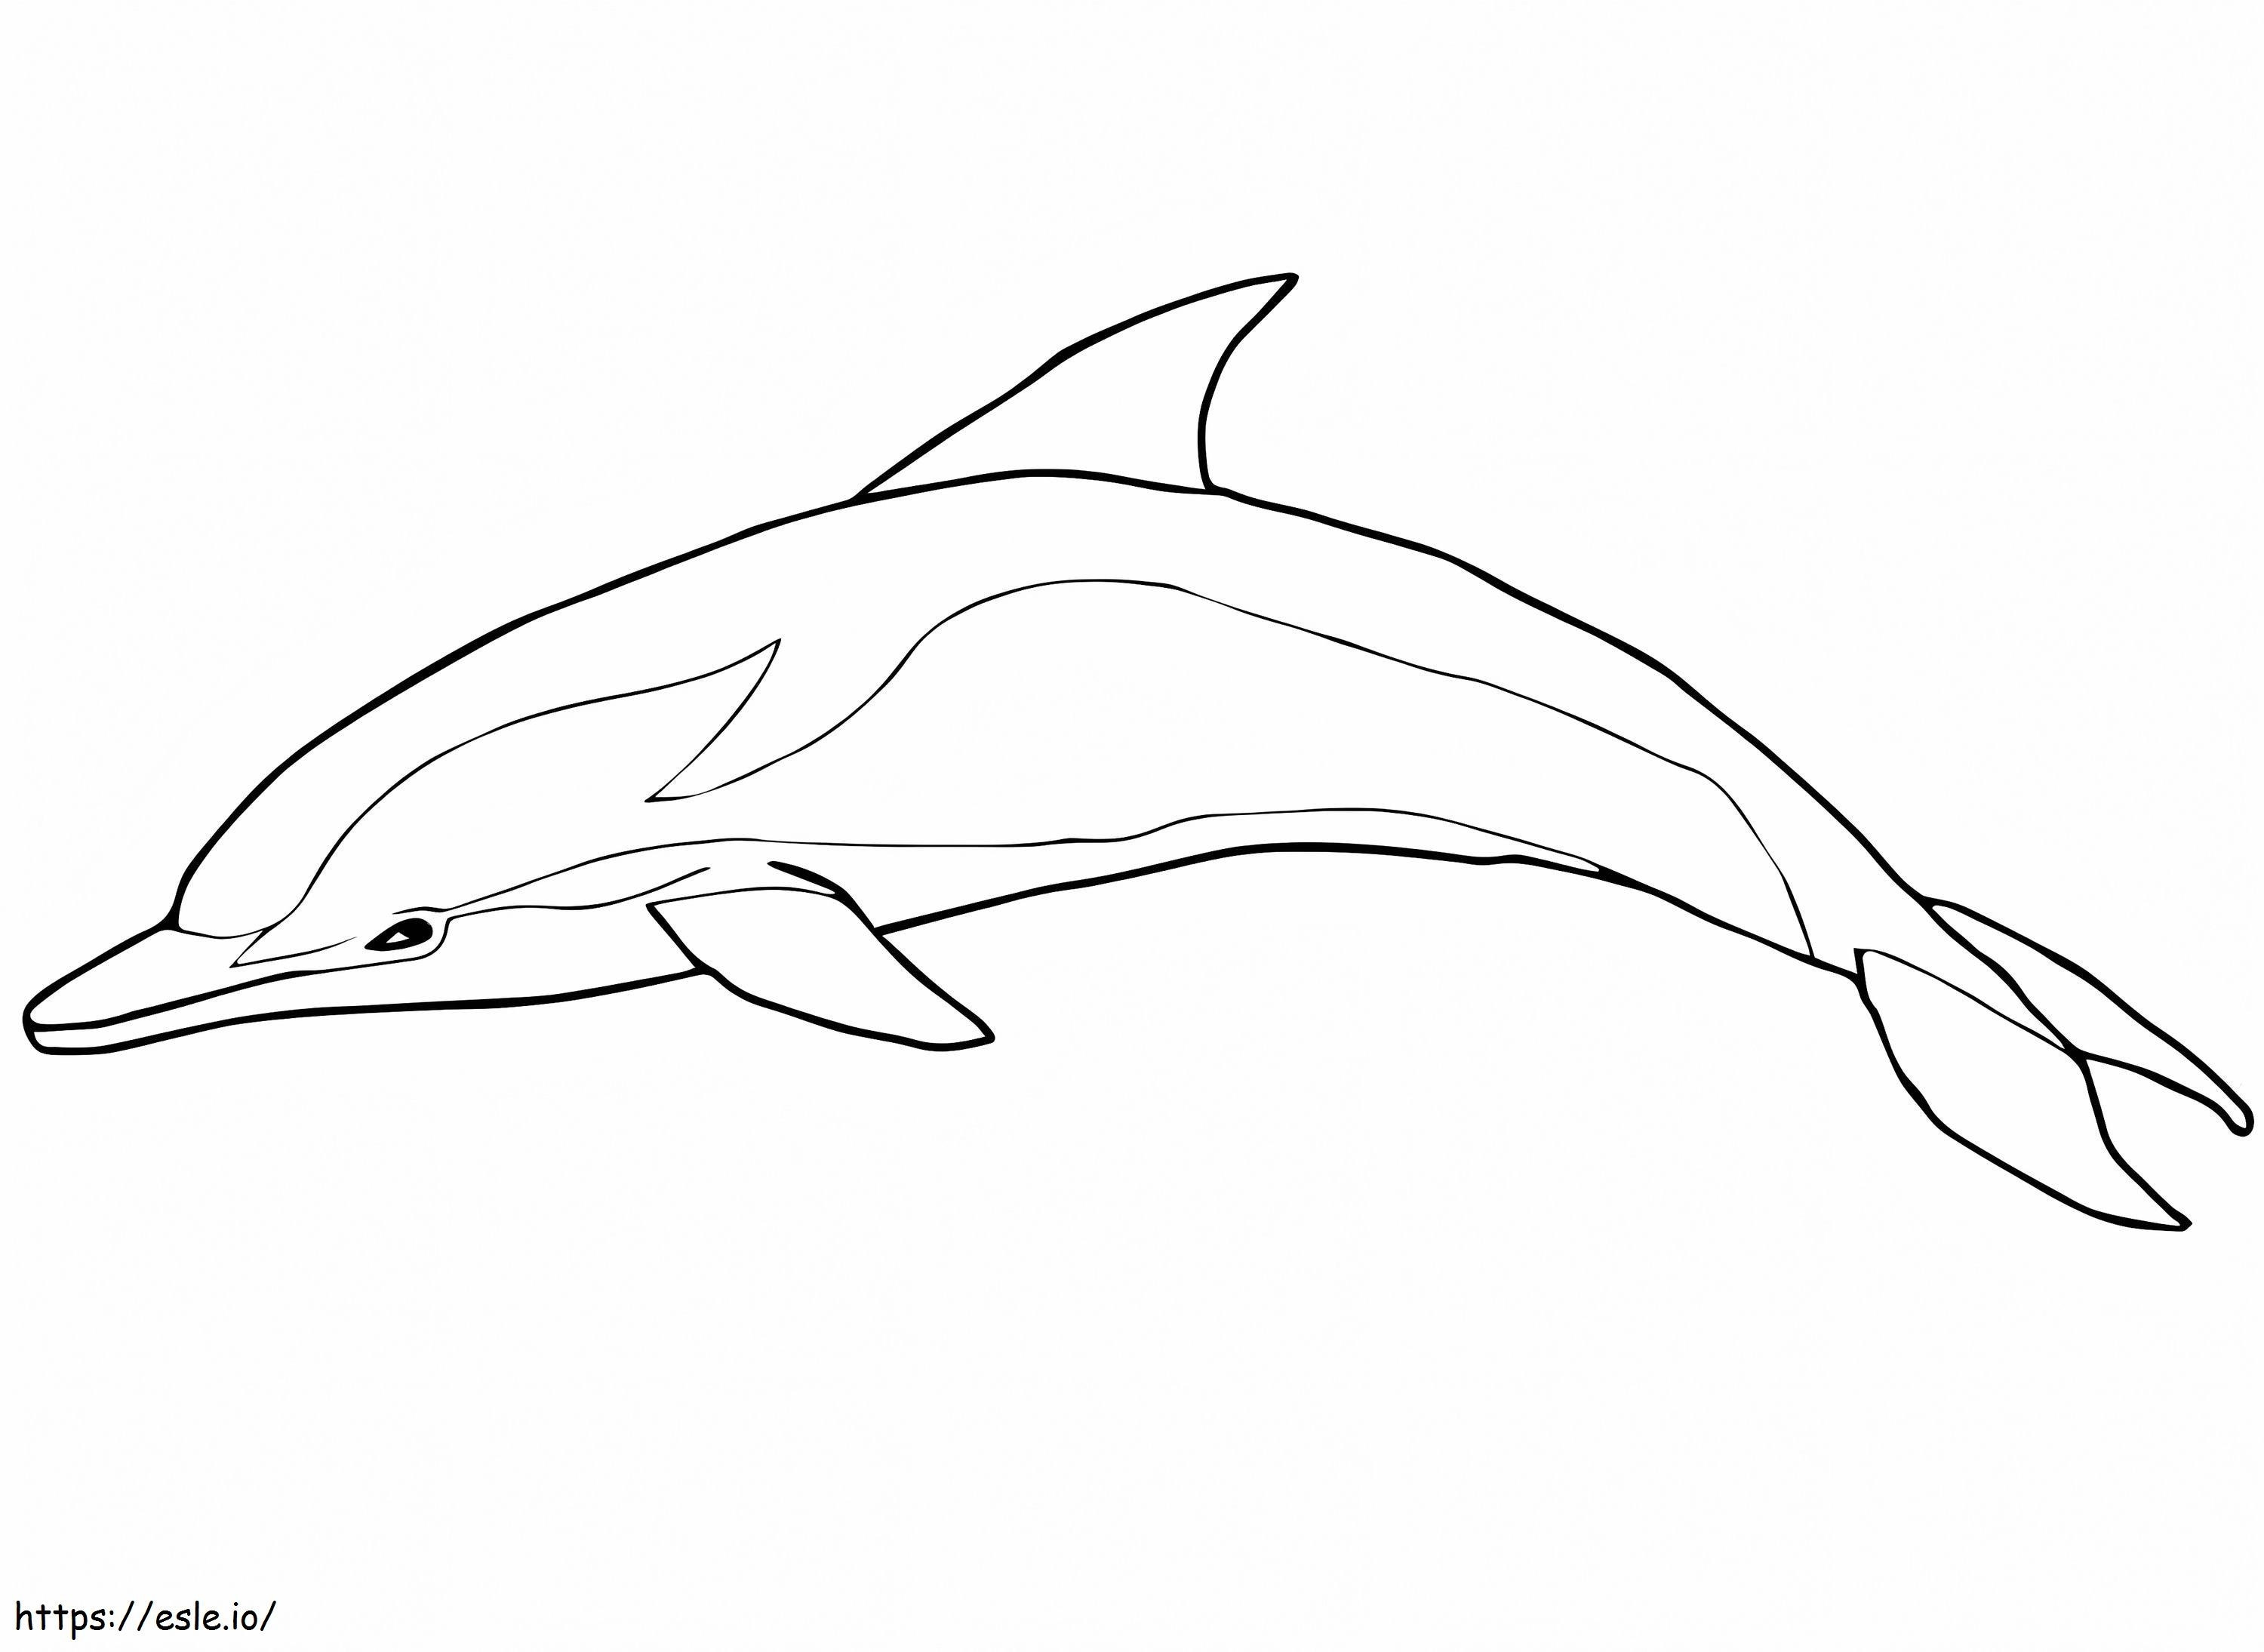 Gestreifter Delphin ausmalbilder